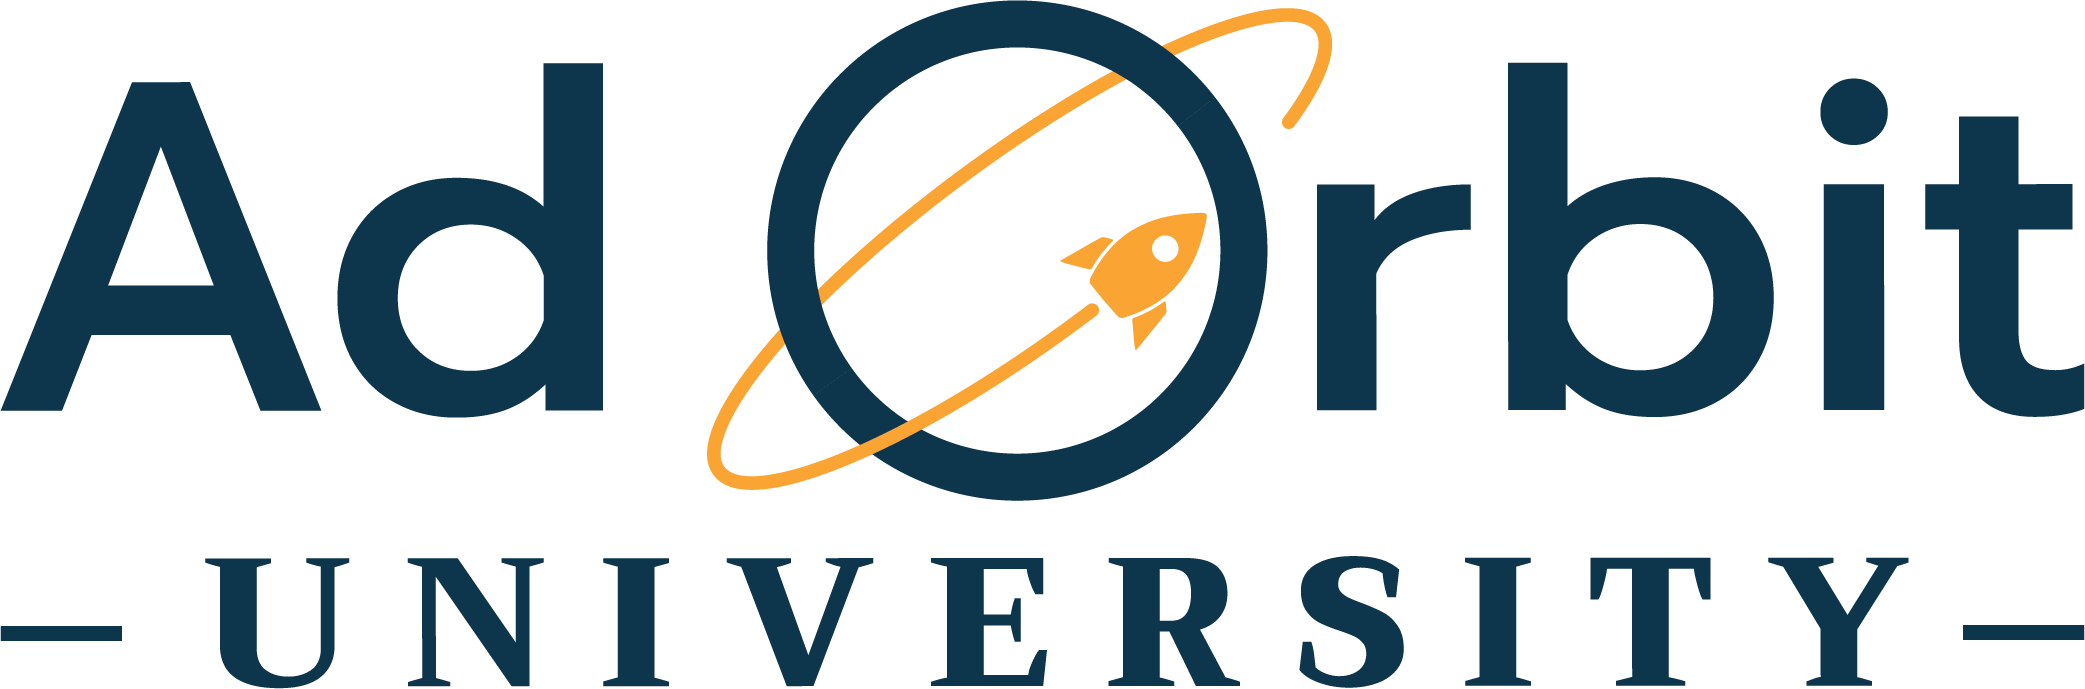 ad orbit university logo